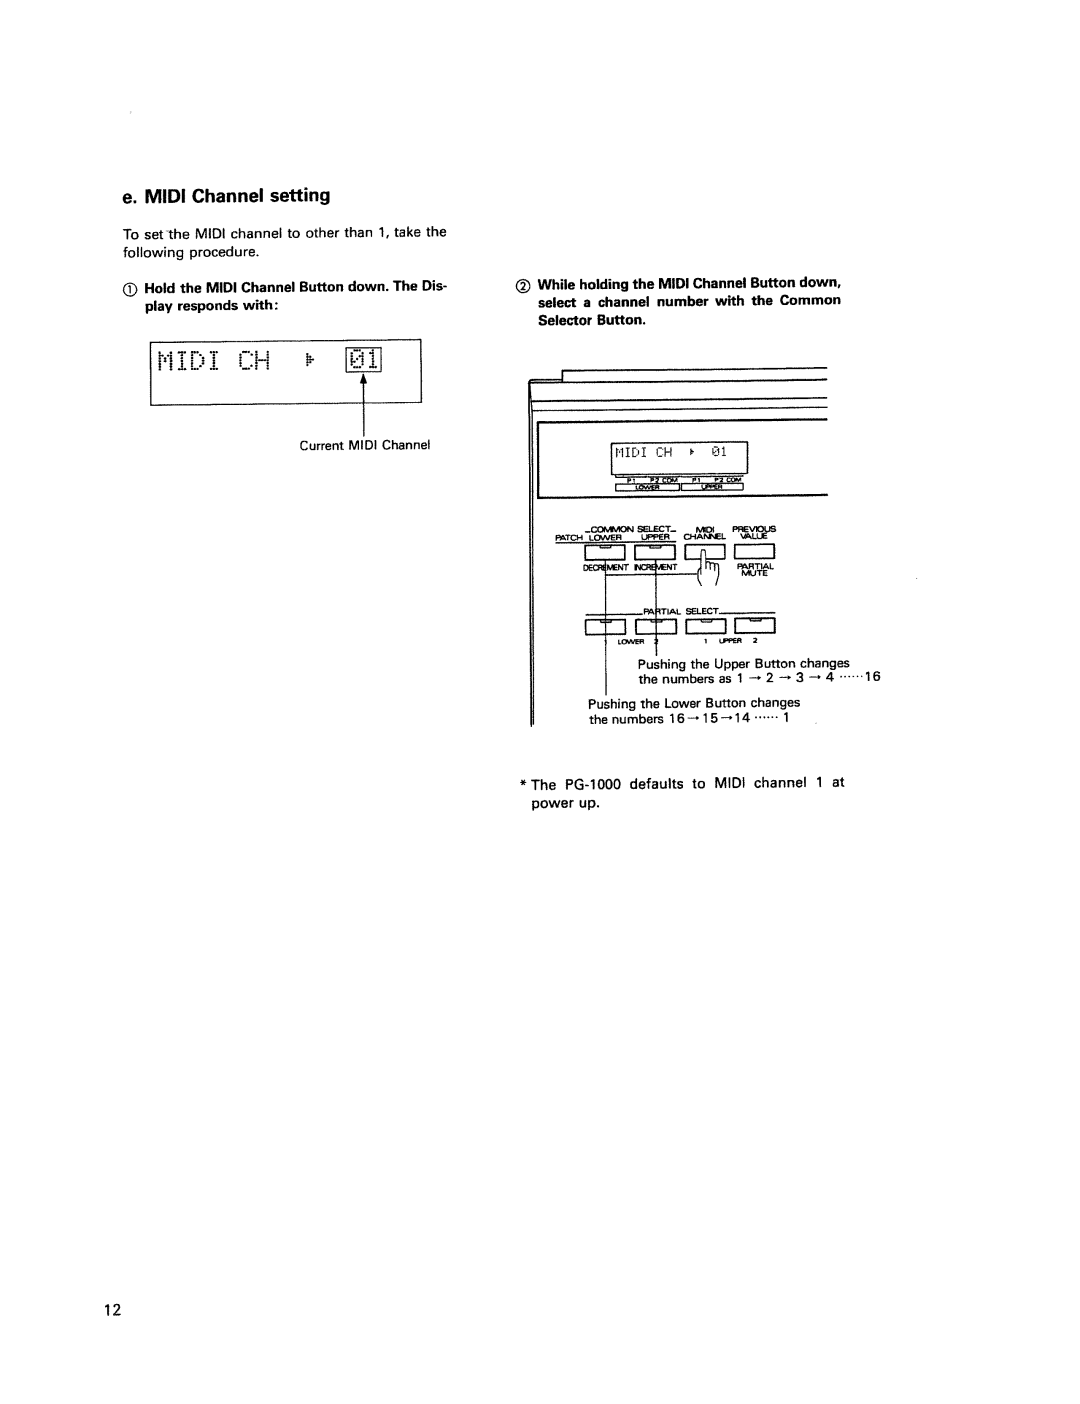 Roland pg-1000 manual 